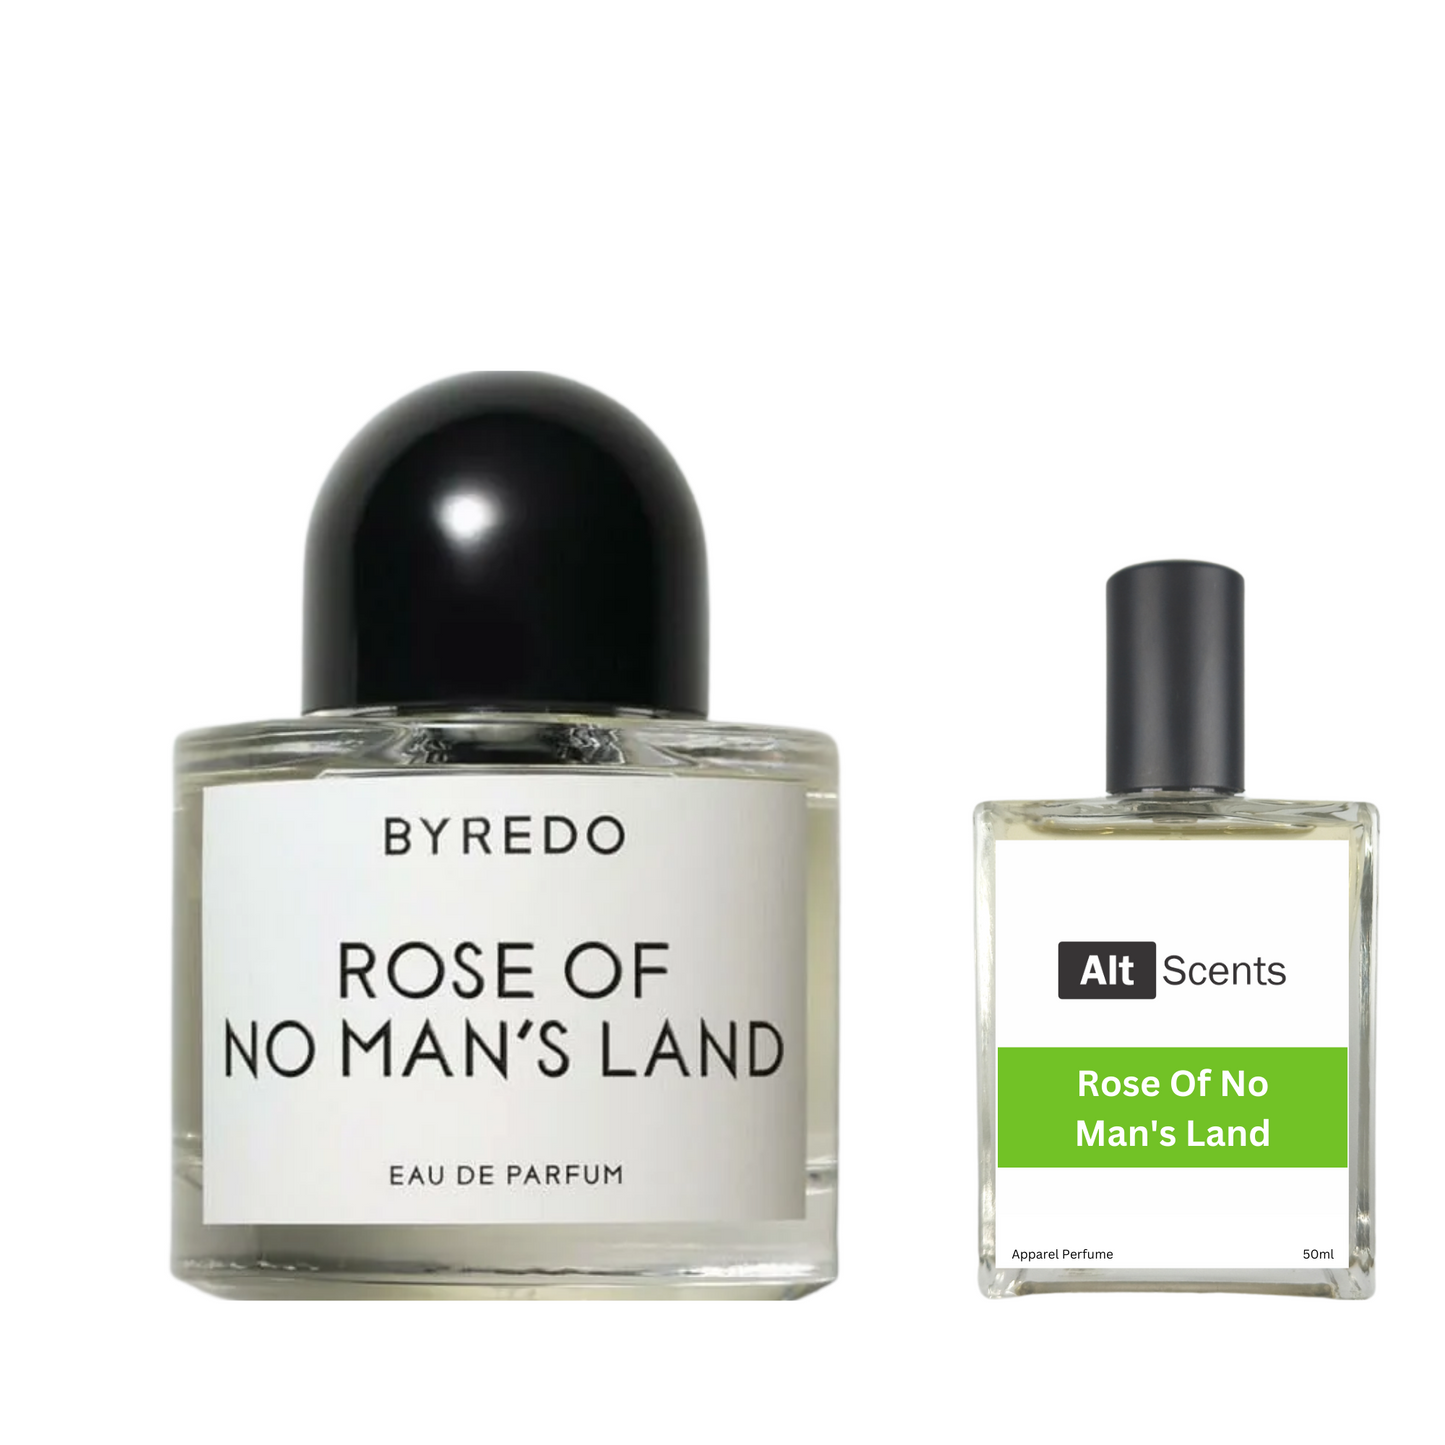 Rose Of No Man's Land by Byredo